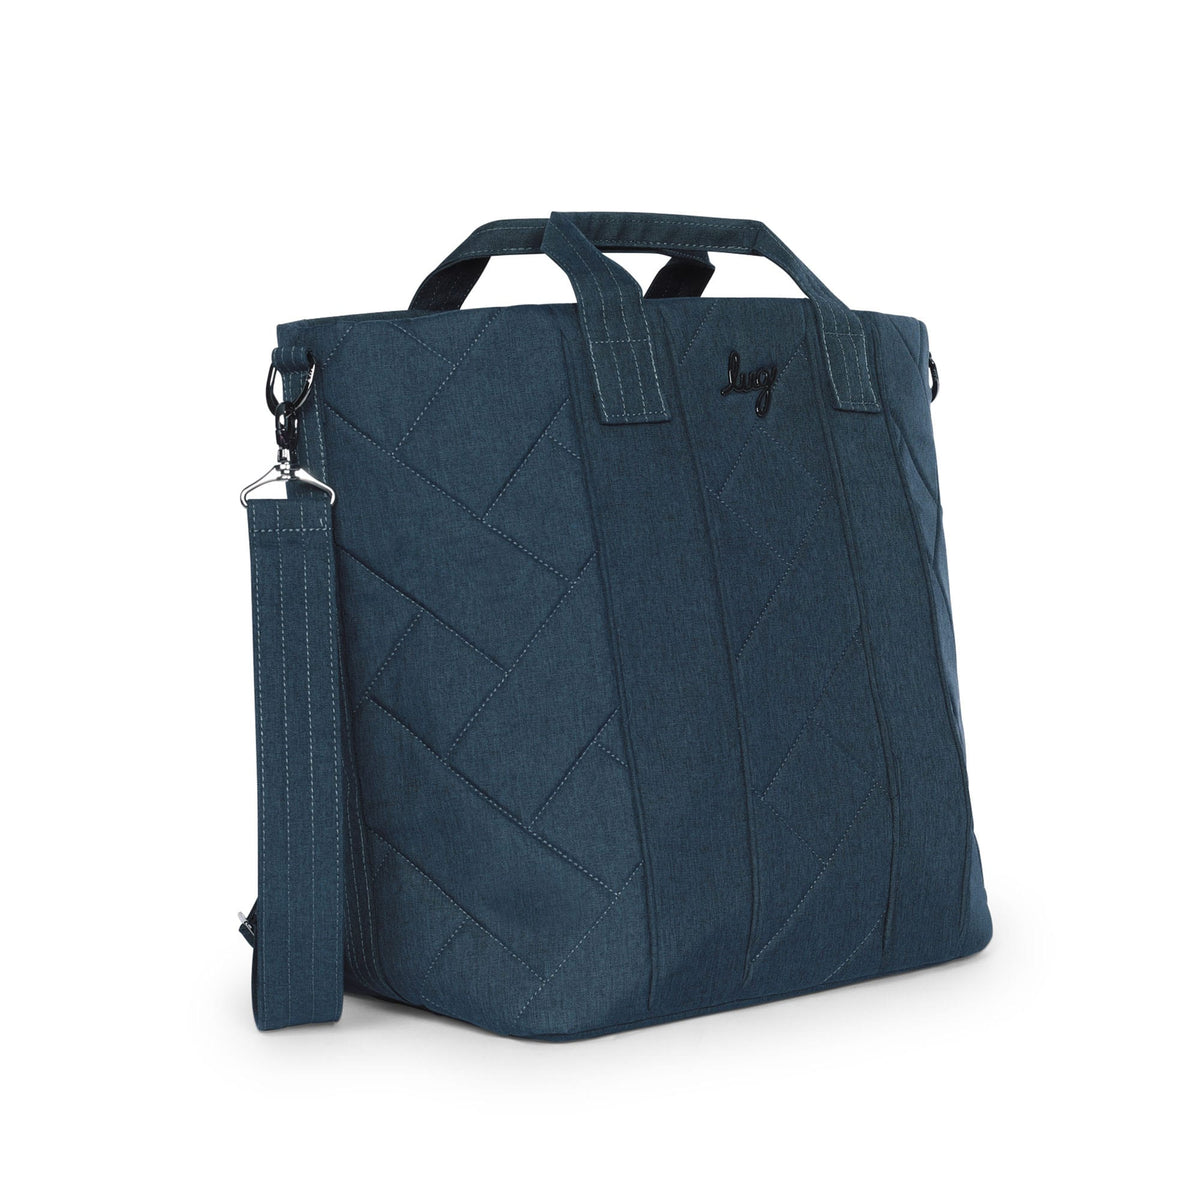 Dory XL Convertible Tote Bag